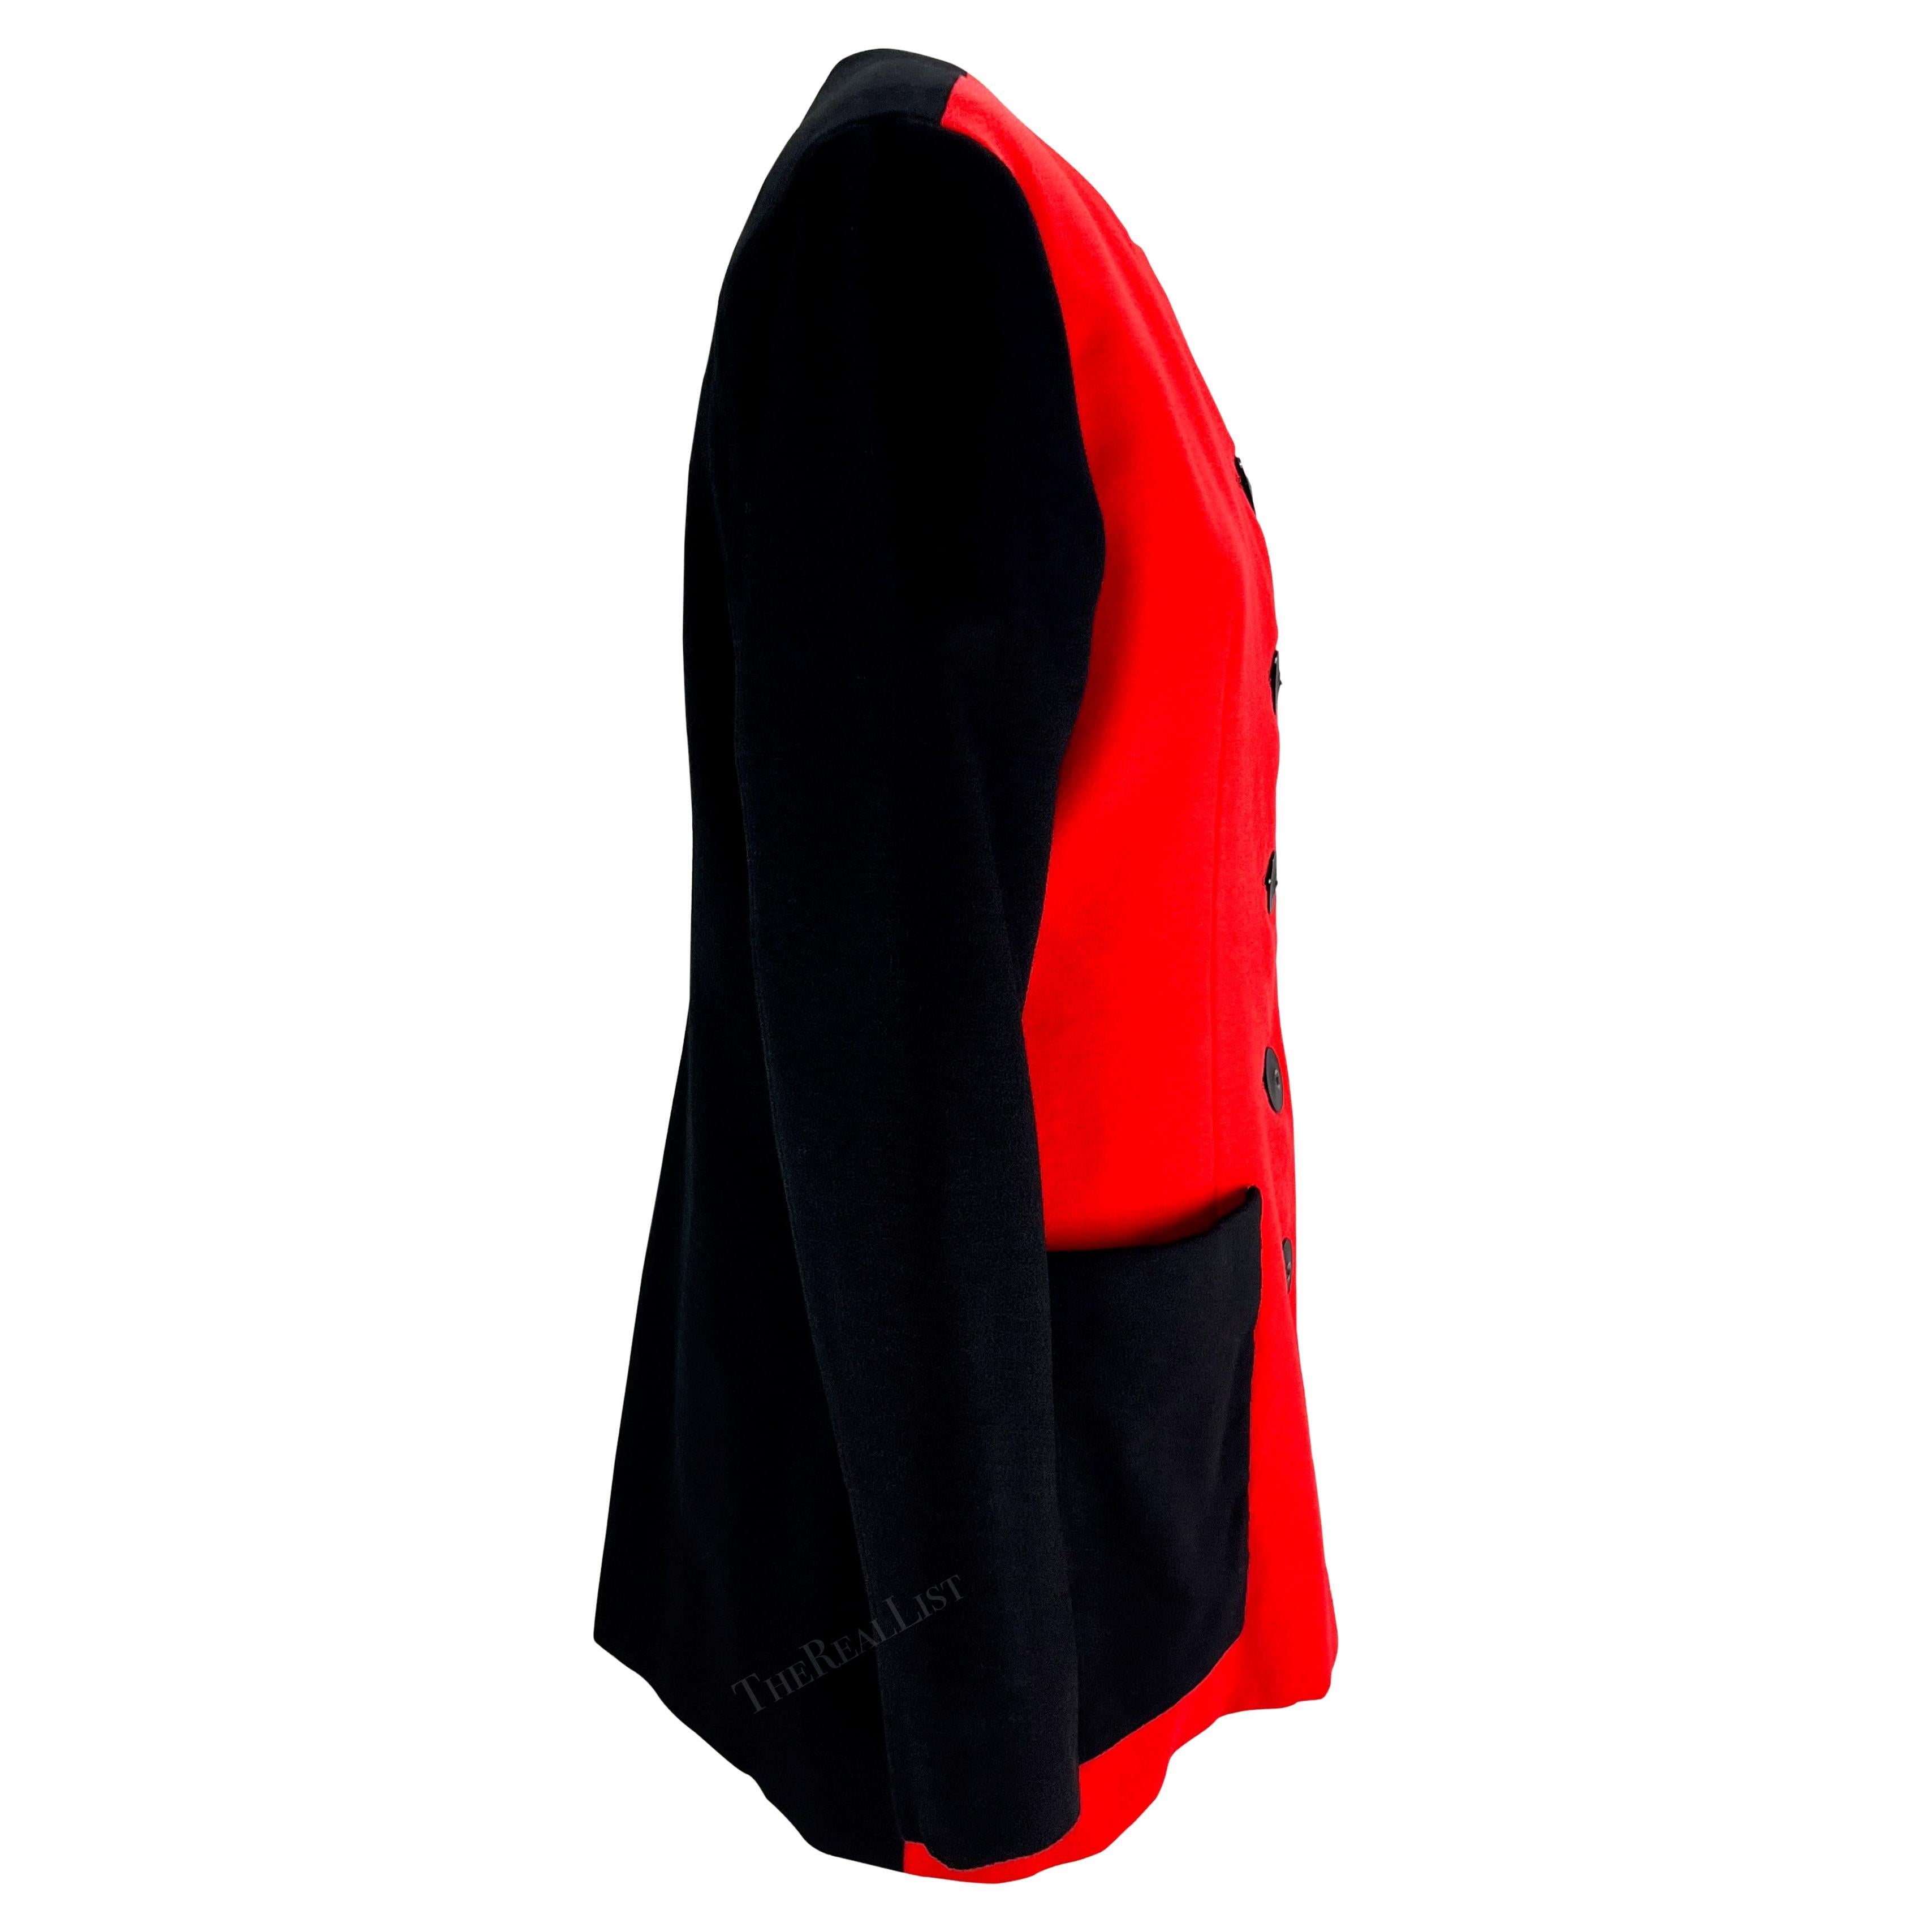 S/S 1992 Yves Saint Laurent Red Color-Block Black Mini Coat Dress Blazer Jacket For Sale 3